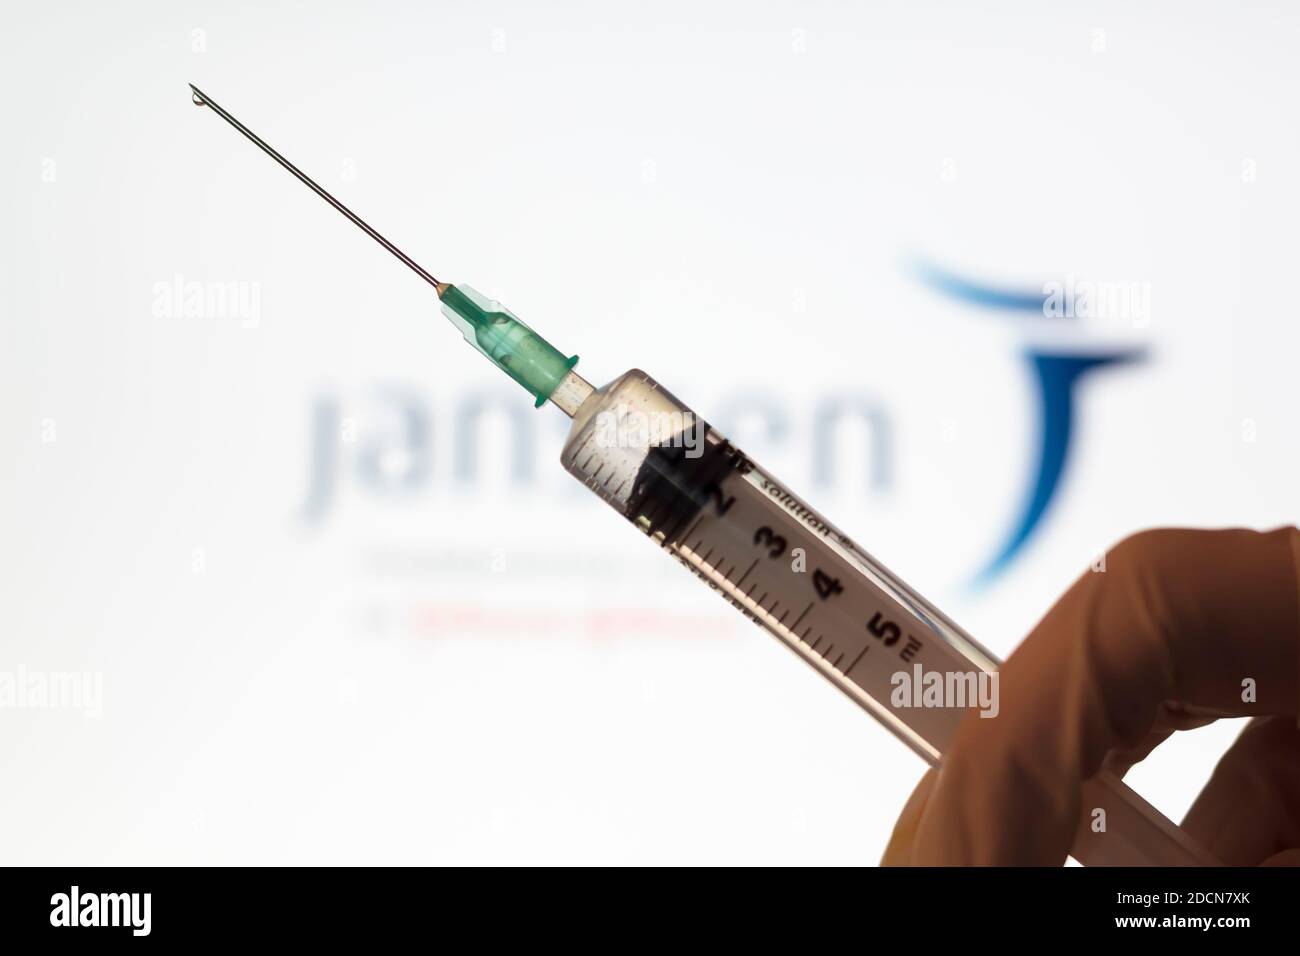 Lisbon, Portugal - November 22, 2020: Syringe and Janssen logo on the background. Coronavirus, Covid-19 vaccine concept Stock Photo